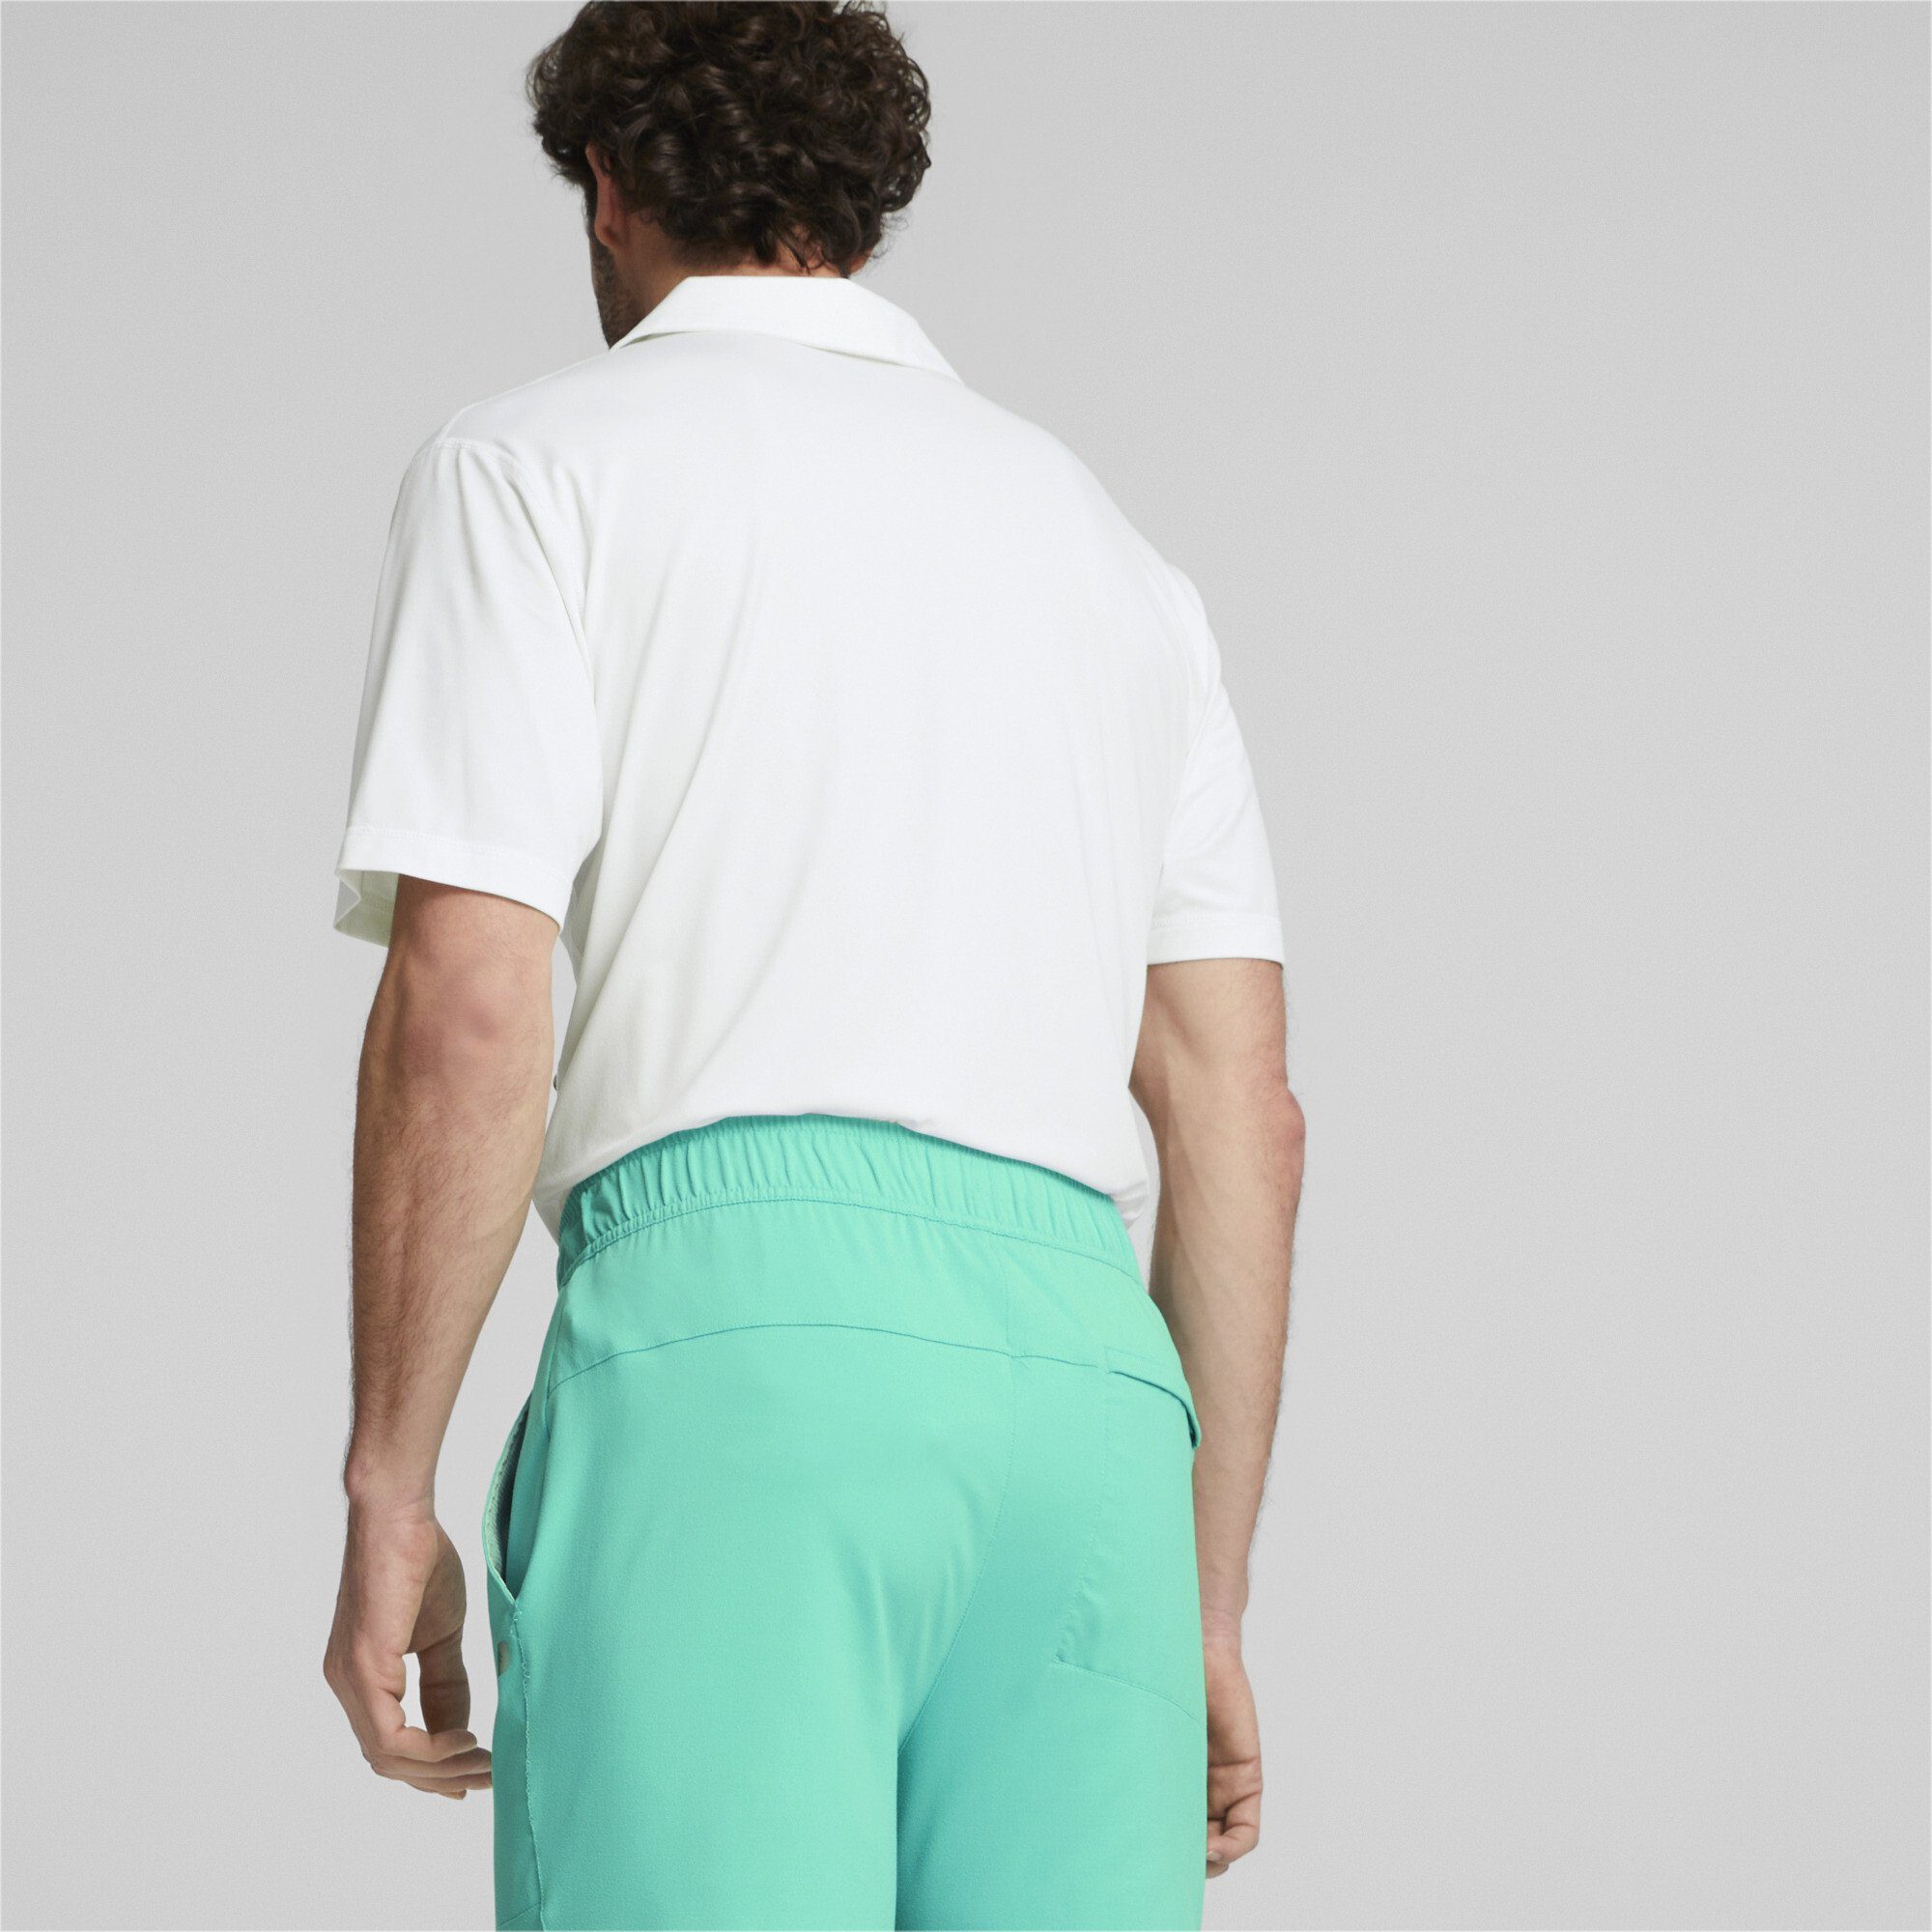 White Herren Golf-Poloshirt x Bright Poloshirt PALM PUMA TREE PUMA CREW